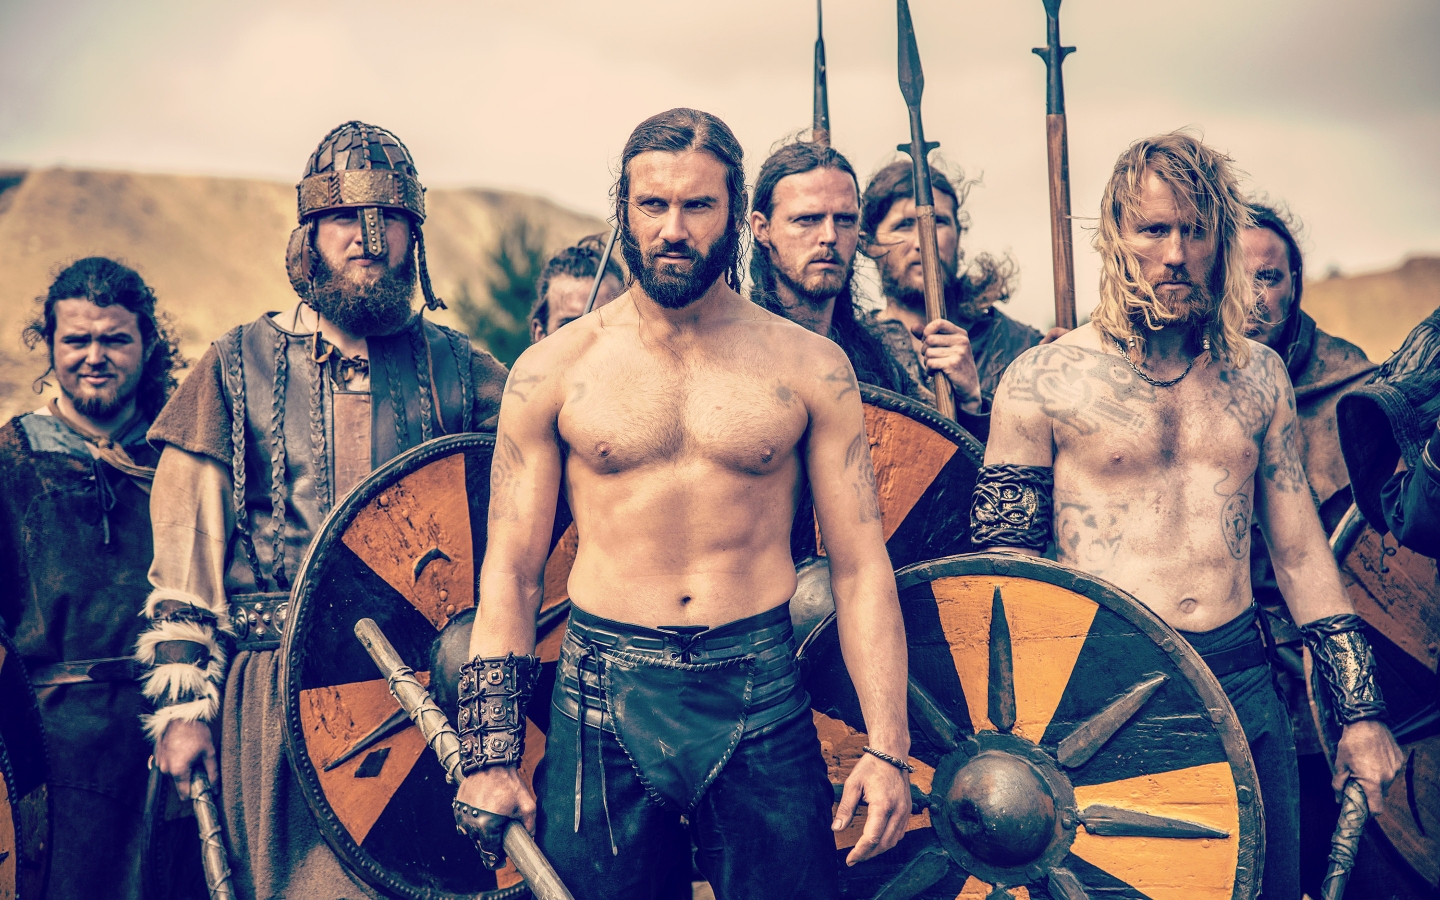 Vikings Season 2 Scene for 1440 x 900 widescreen resolution